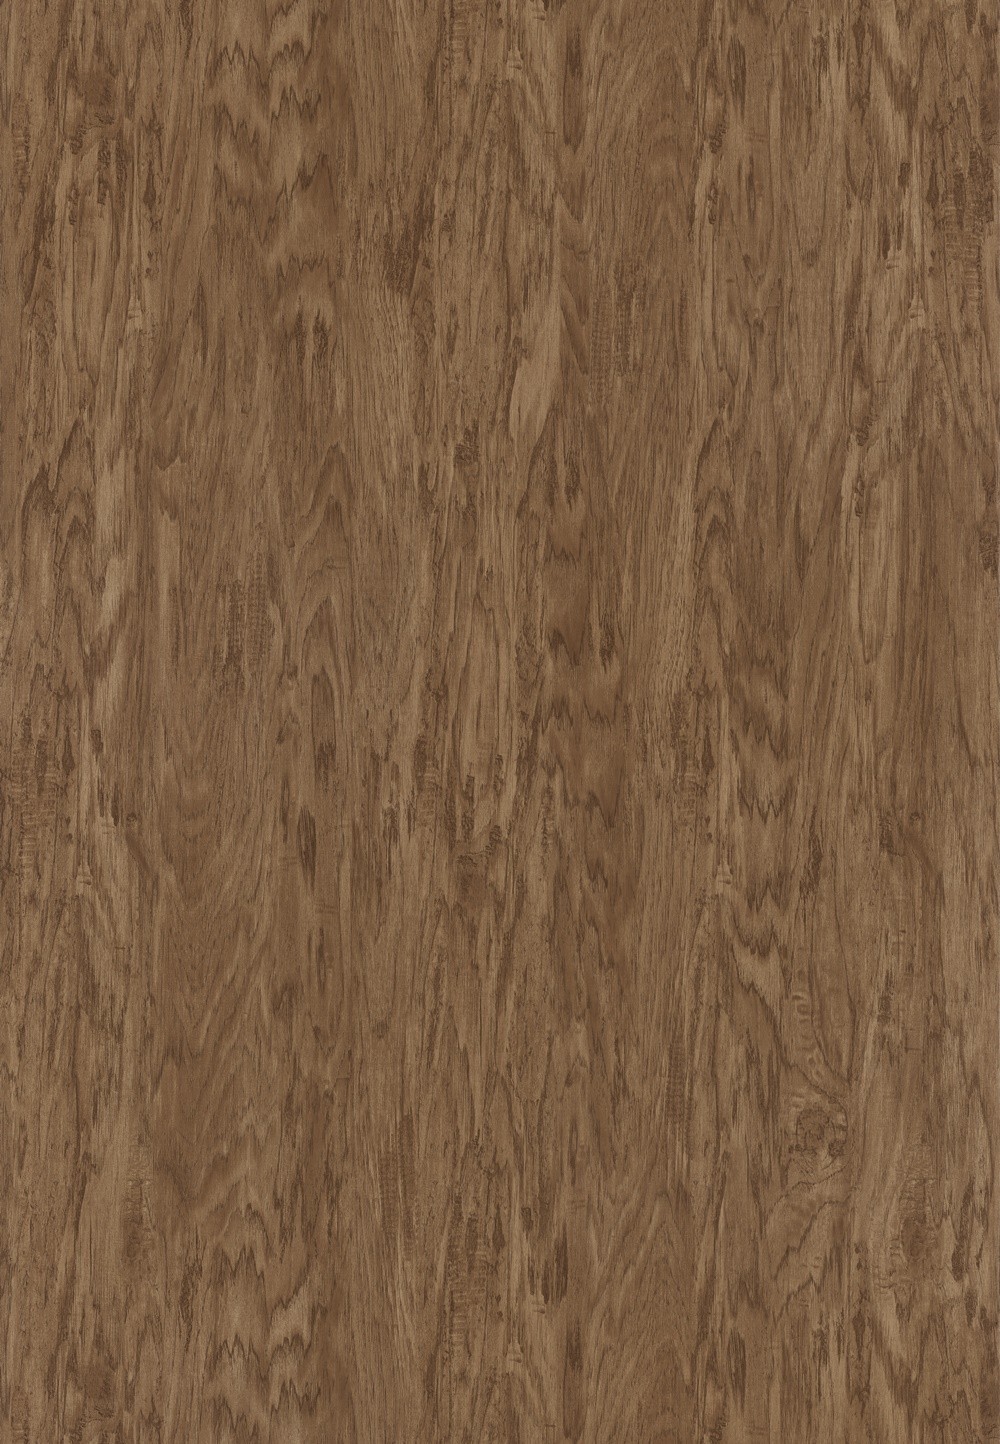 Countryside 3.0mm Amber Floor Sample